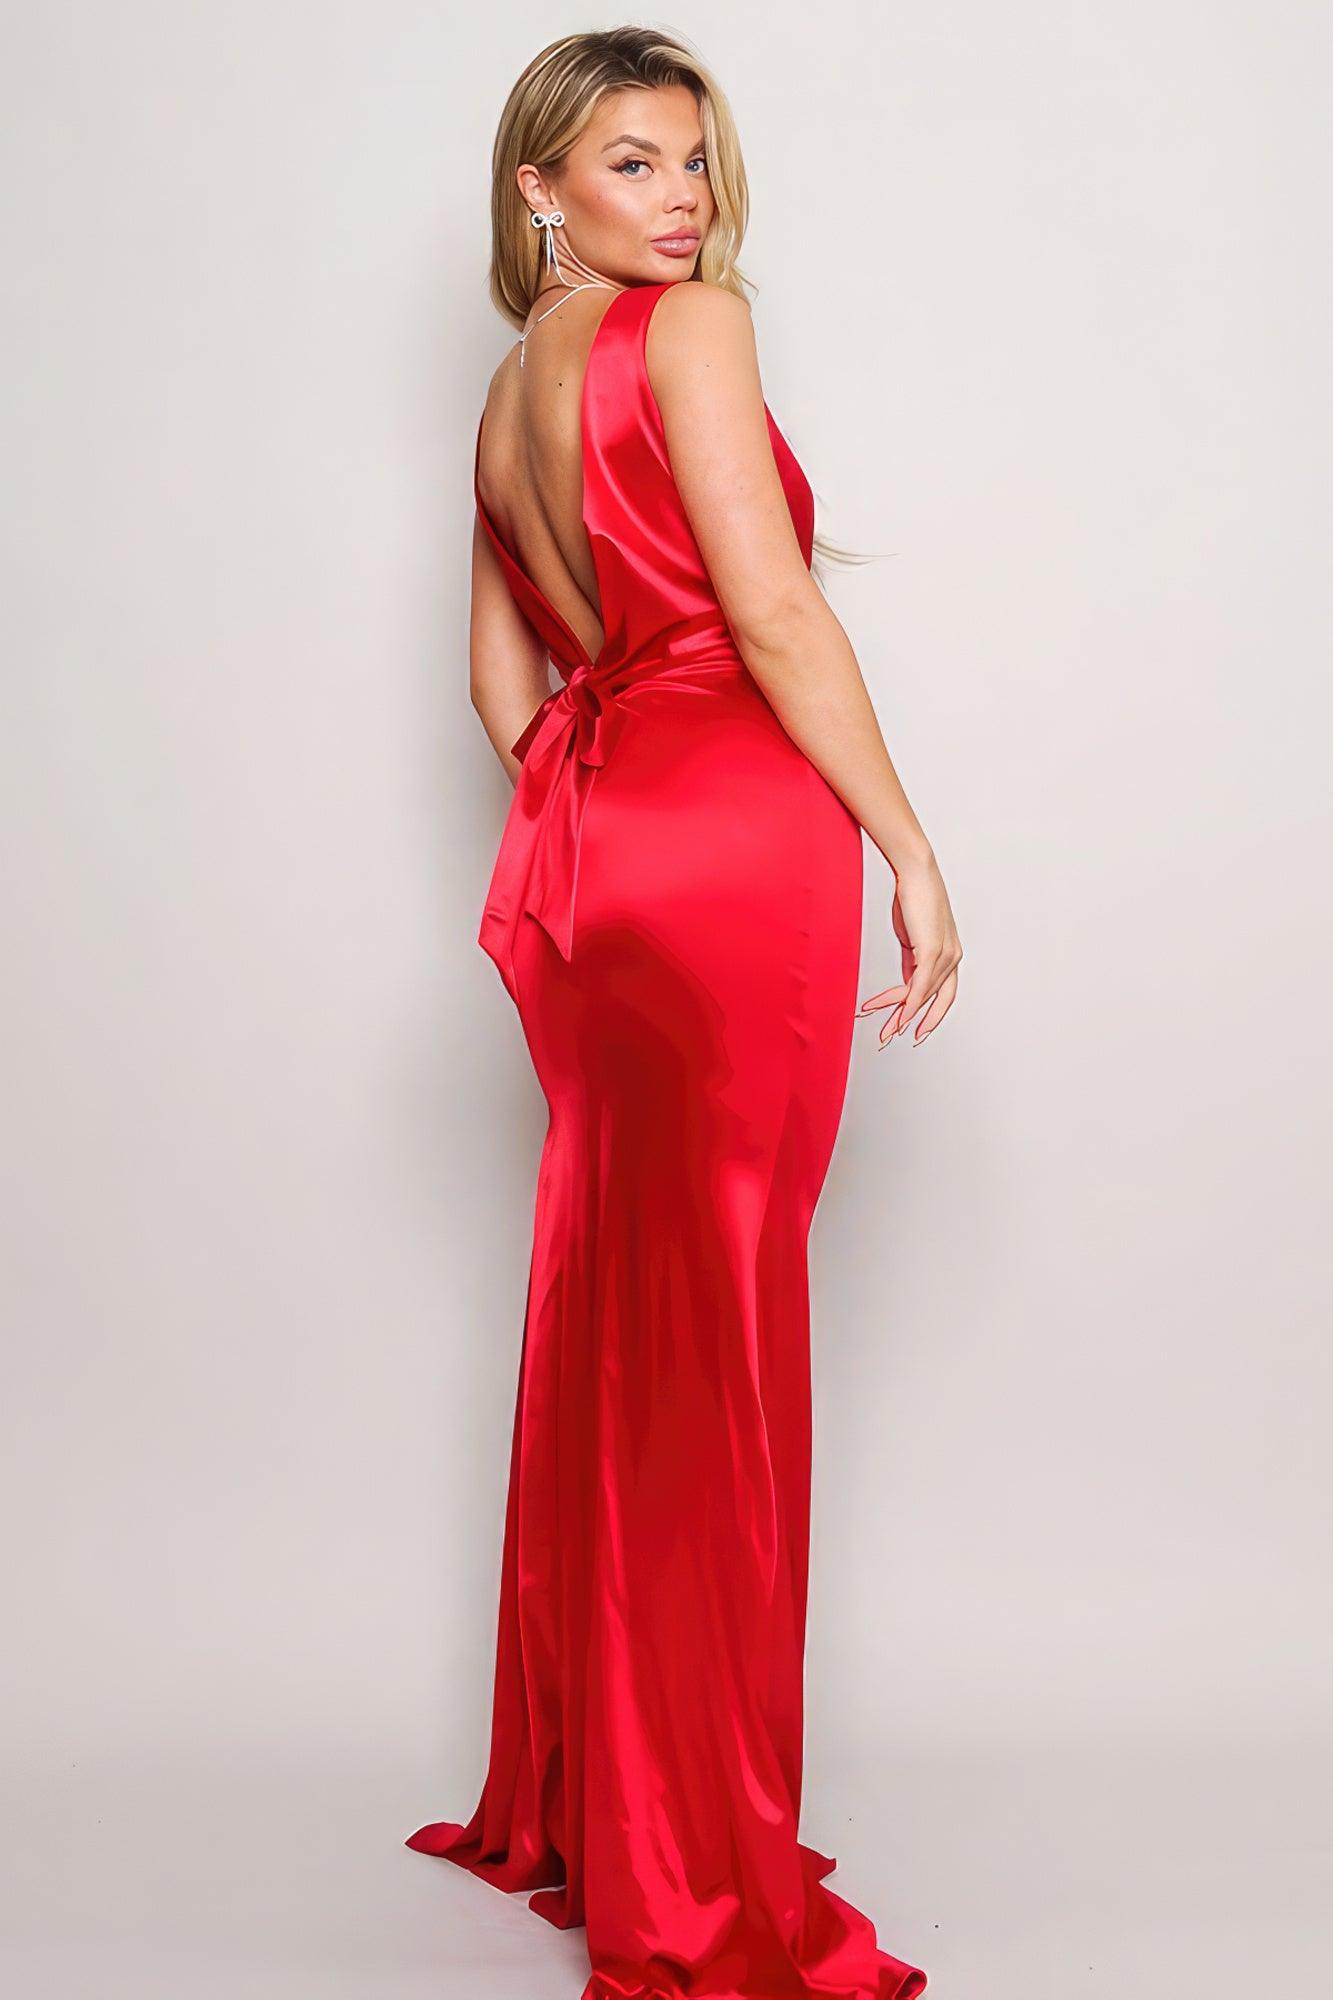 Women's Dresses Sleeveless Deep V Low Back Bow Maxi Dress - Vibrant Red